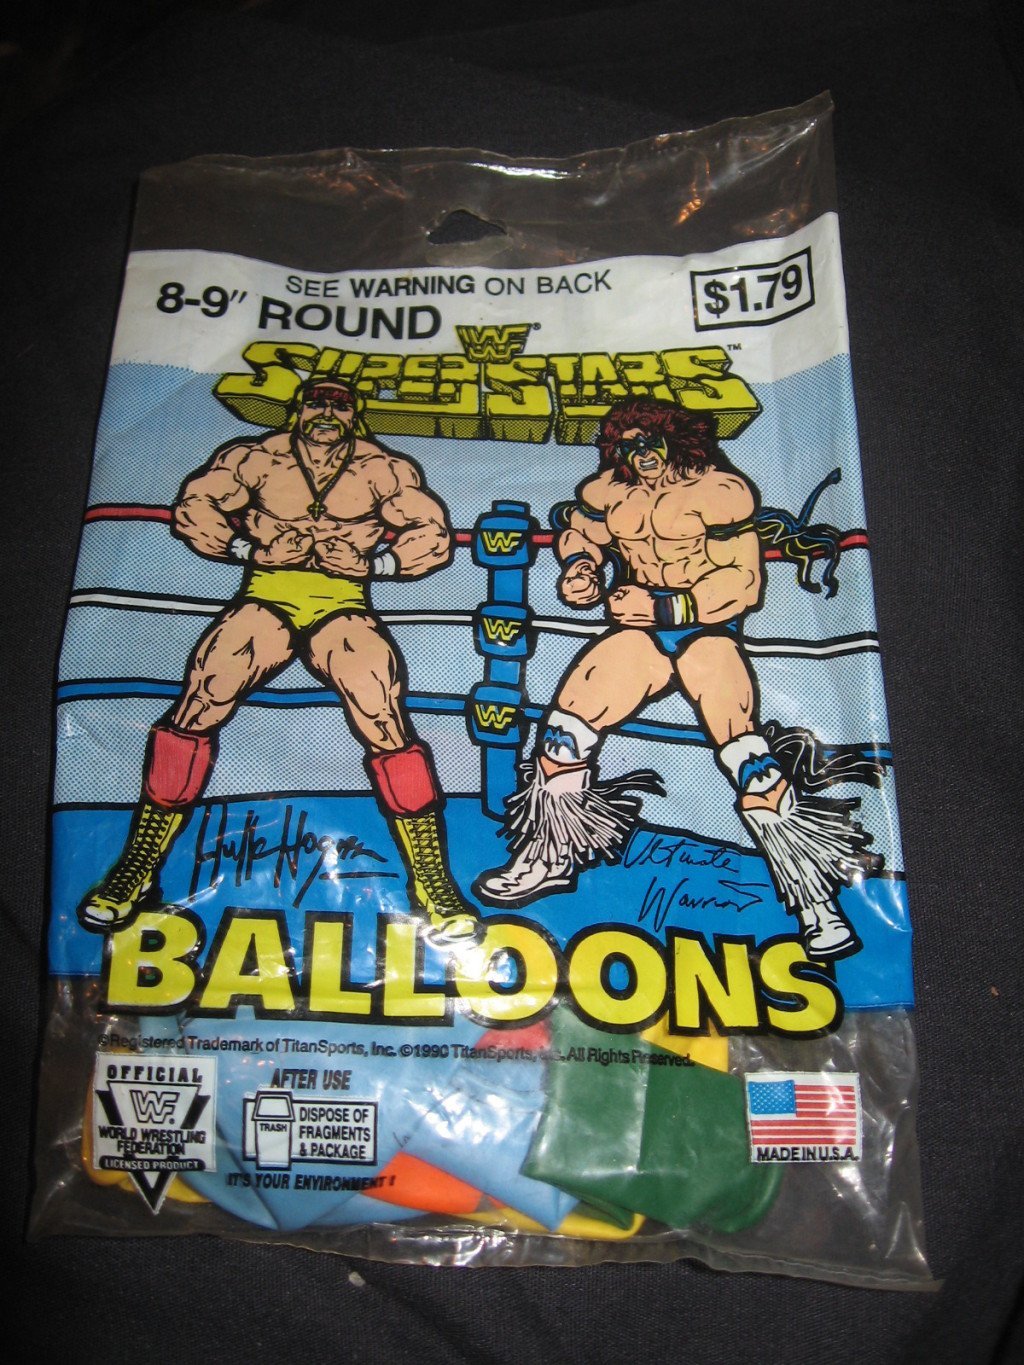 WWF Hulk Hogan Ultimate Warrior round balloons